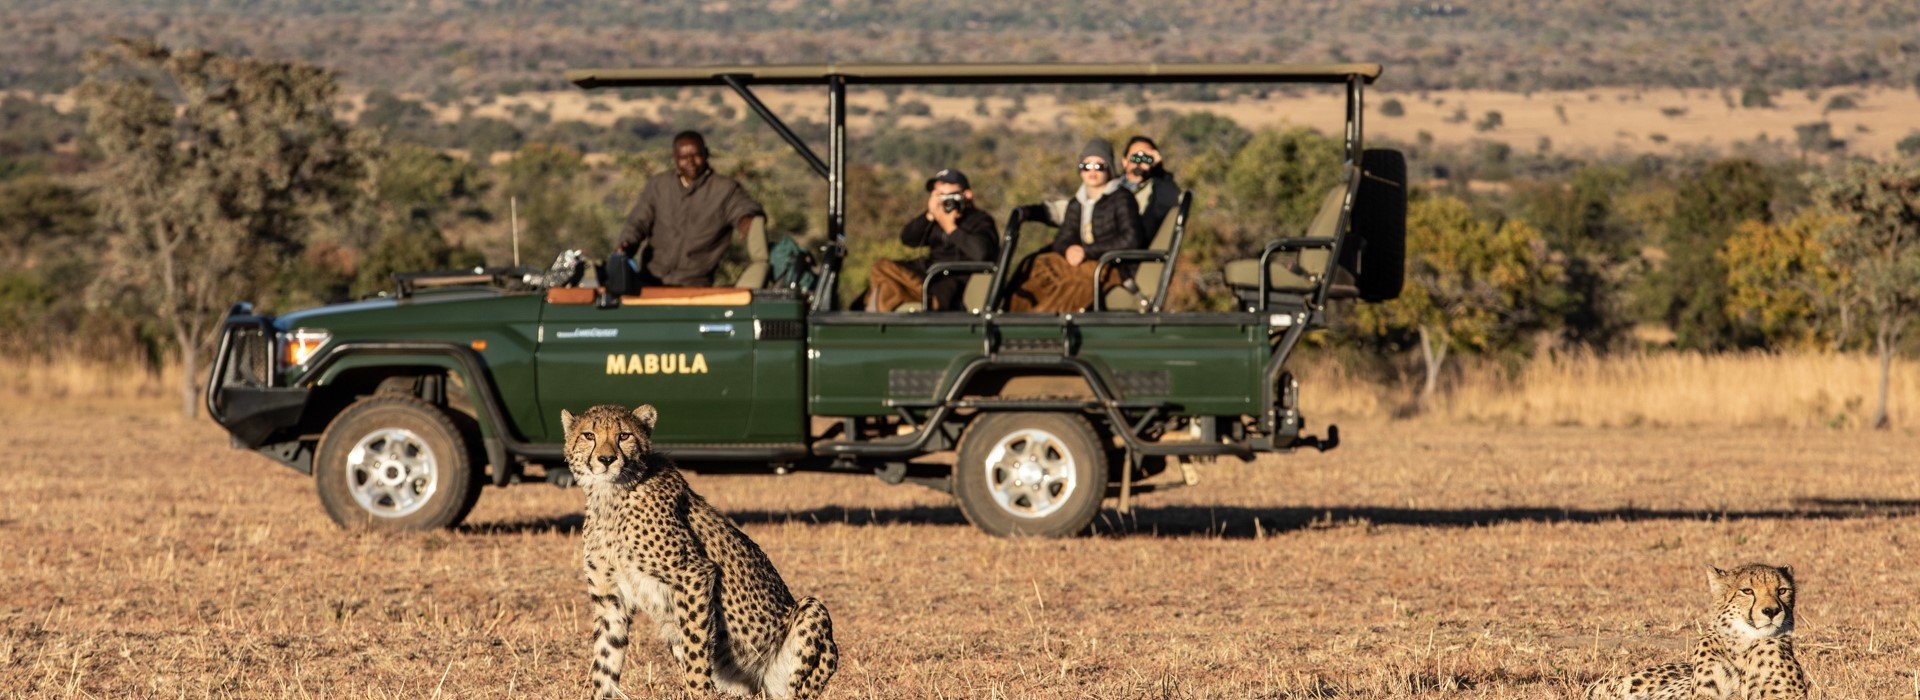 tourhub | Newmarket Holidays | On Safari in South Africa at Mabula Lodge 